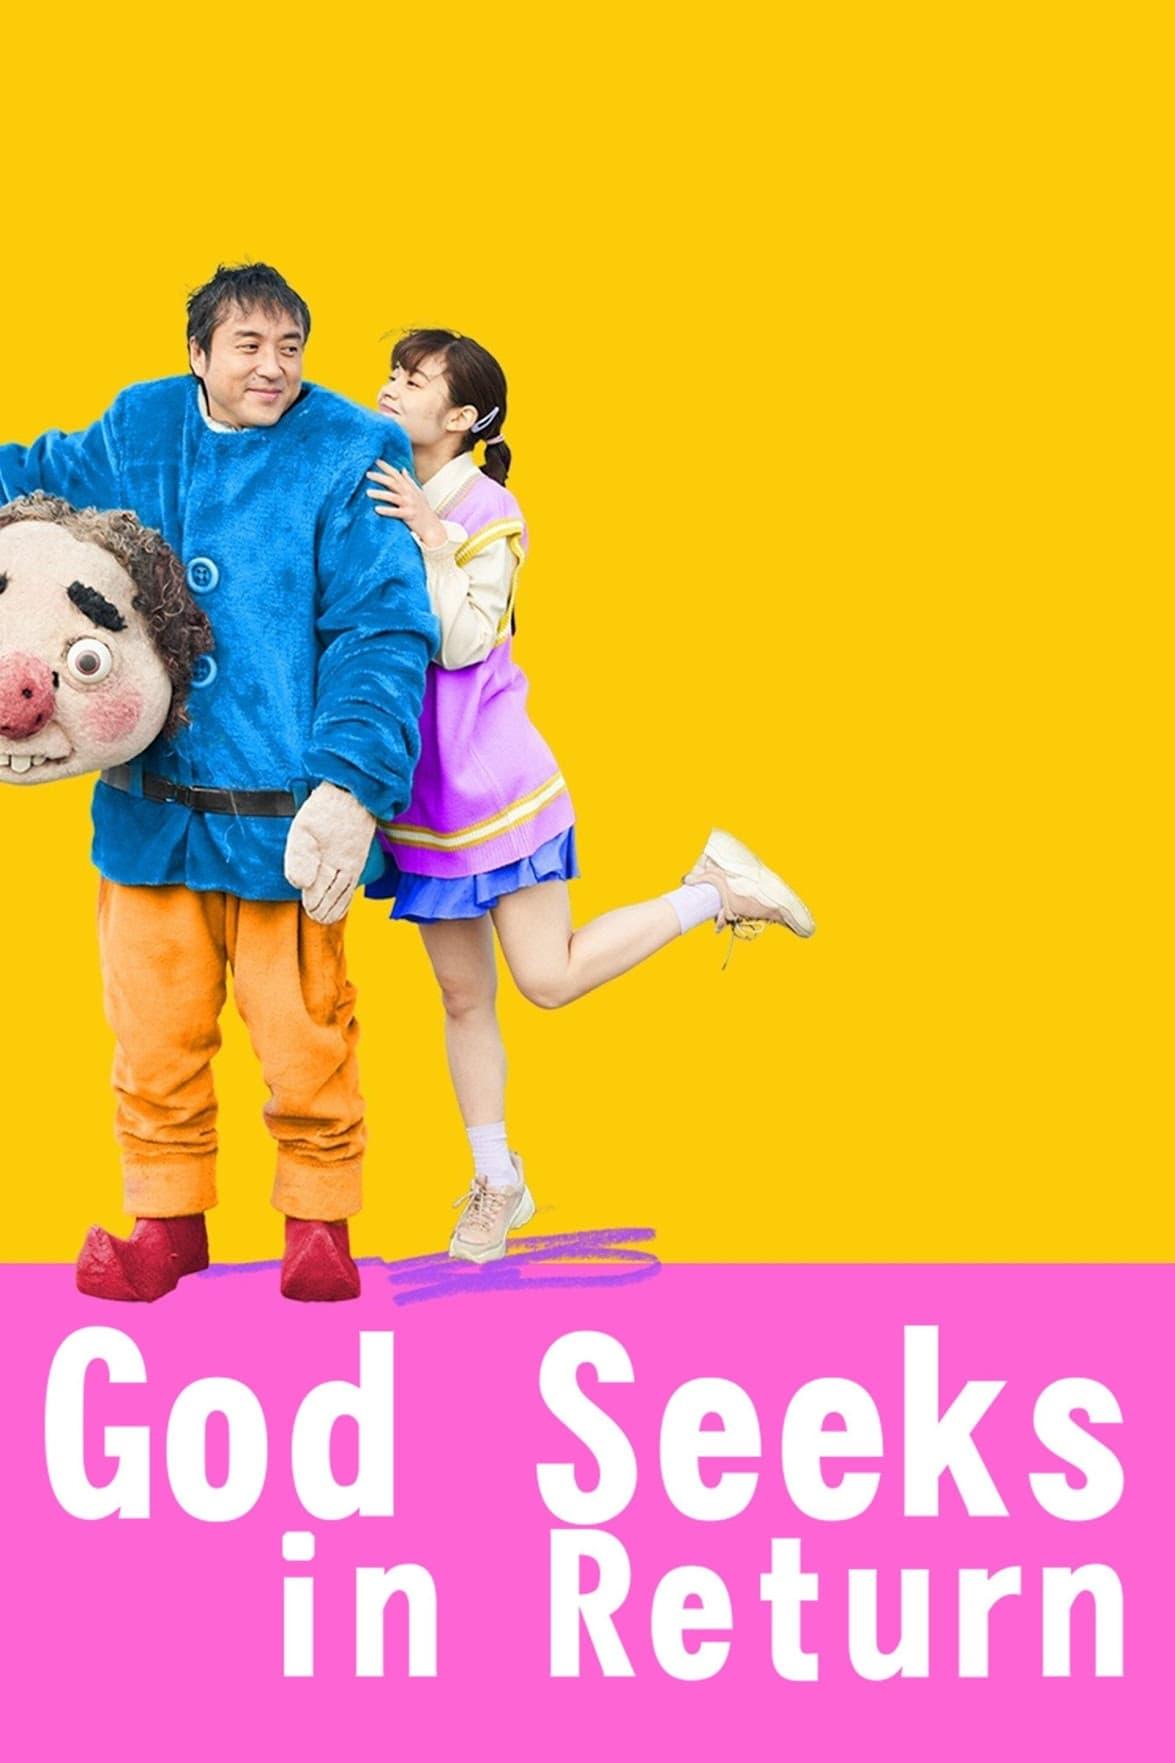 God Seeks in Return poster